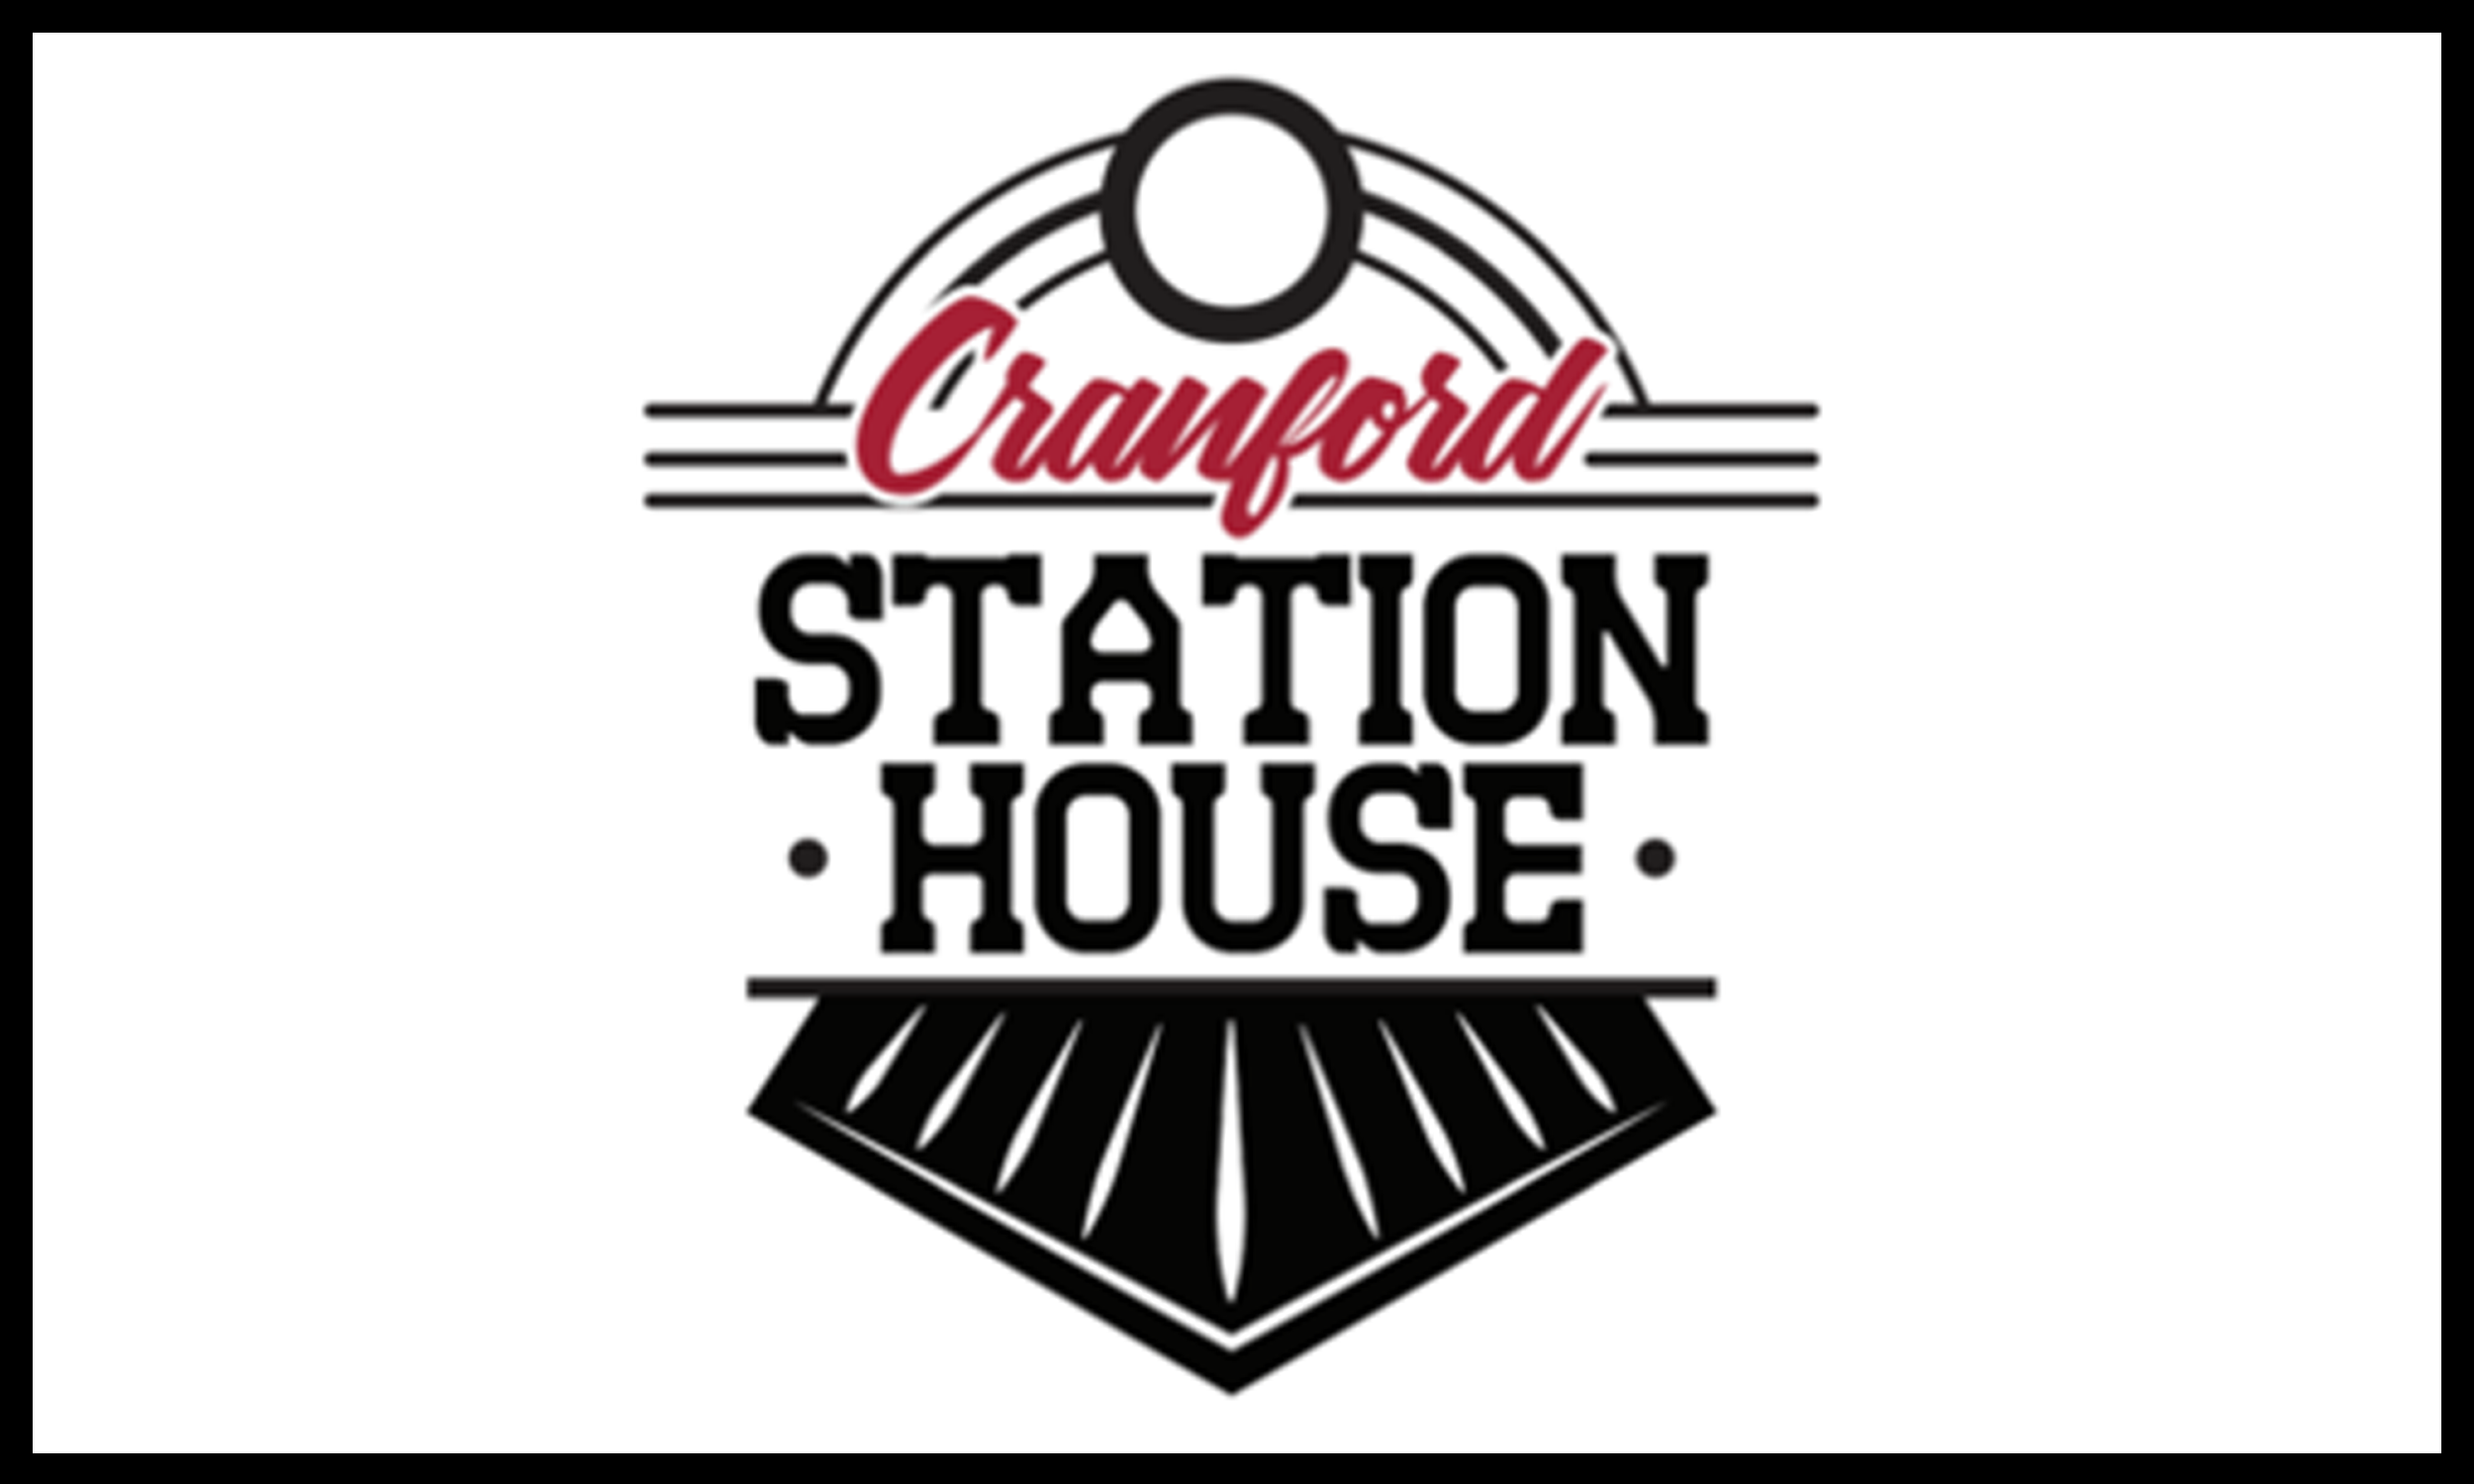 Cranford Station House